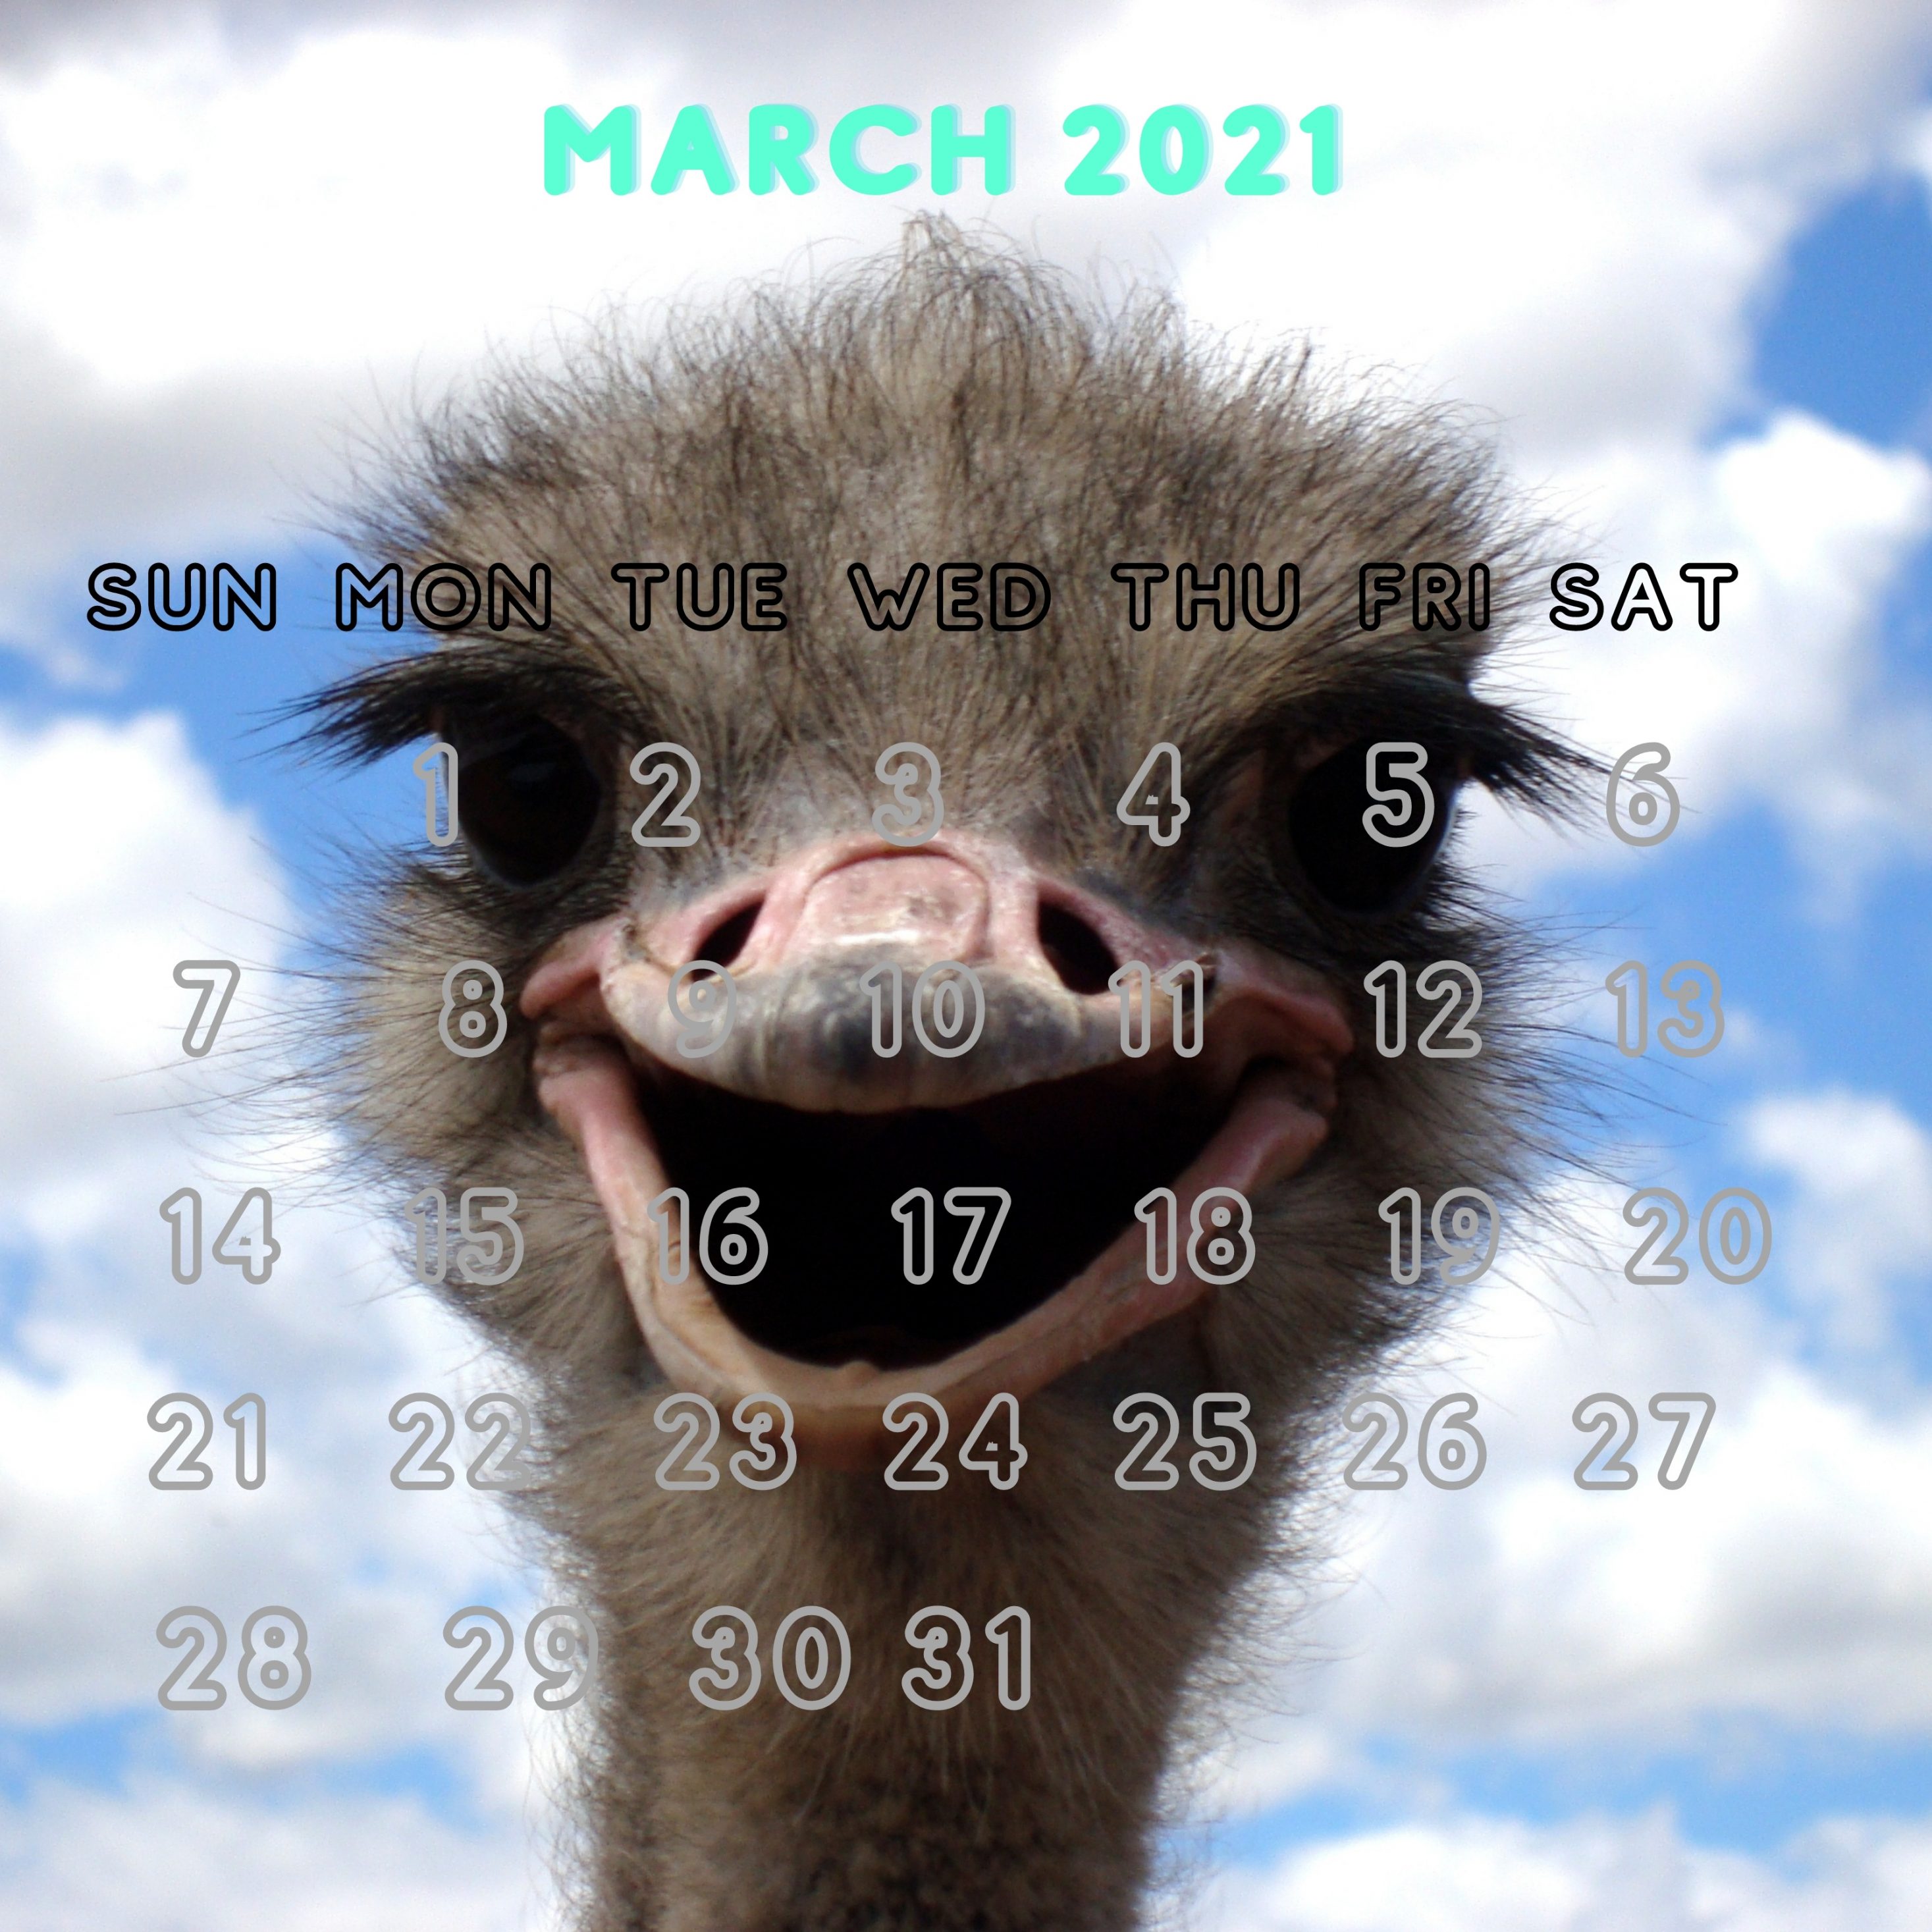 2934x2934 iOS iPad wallpaper 4k March 2021 Ostrich Smiling iPad Wallpaper 2934x2934 pixels resolution